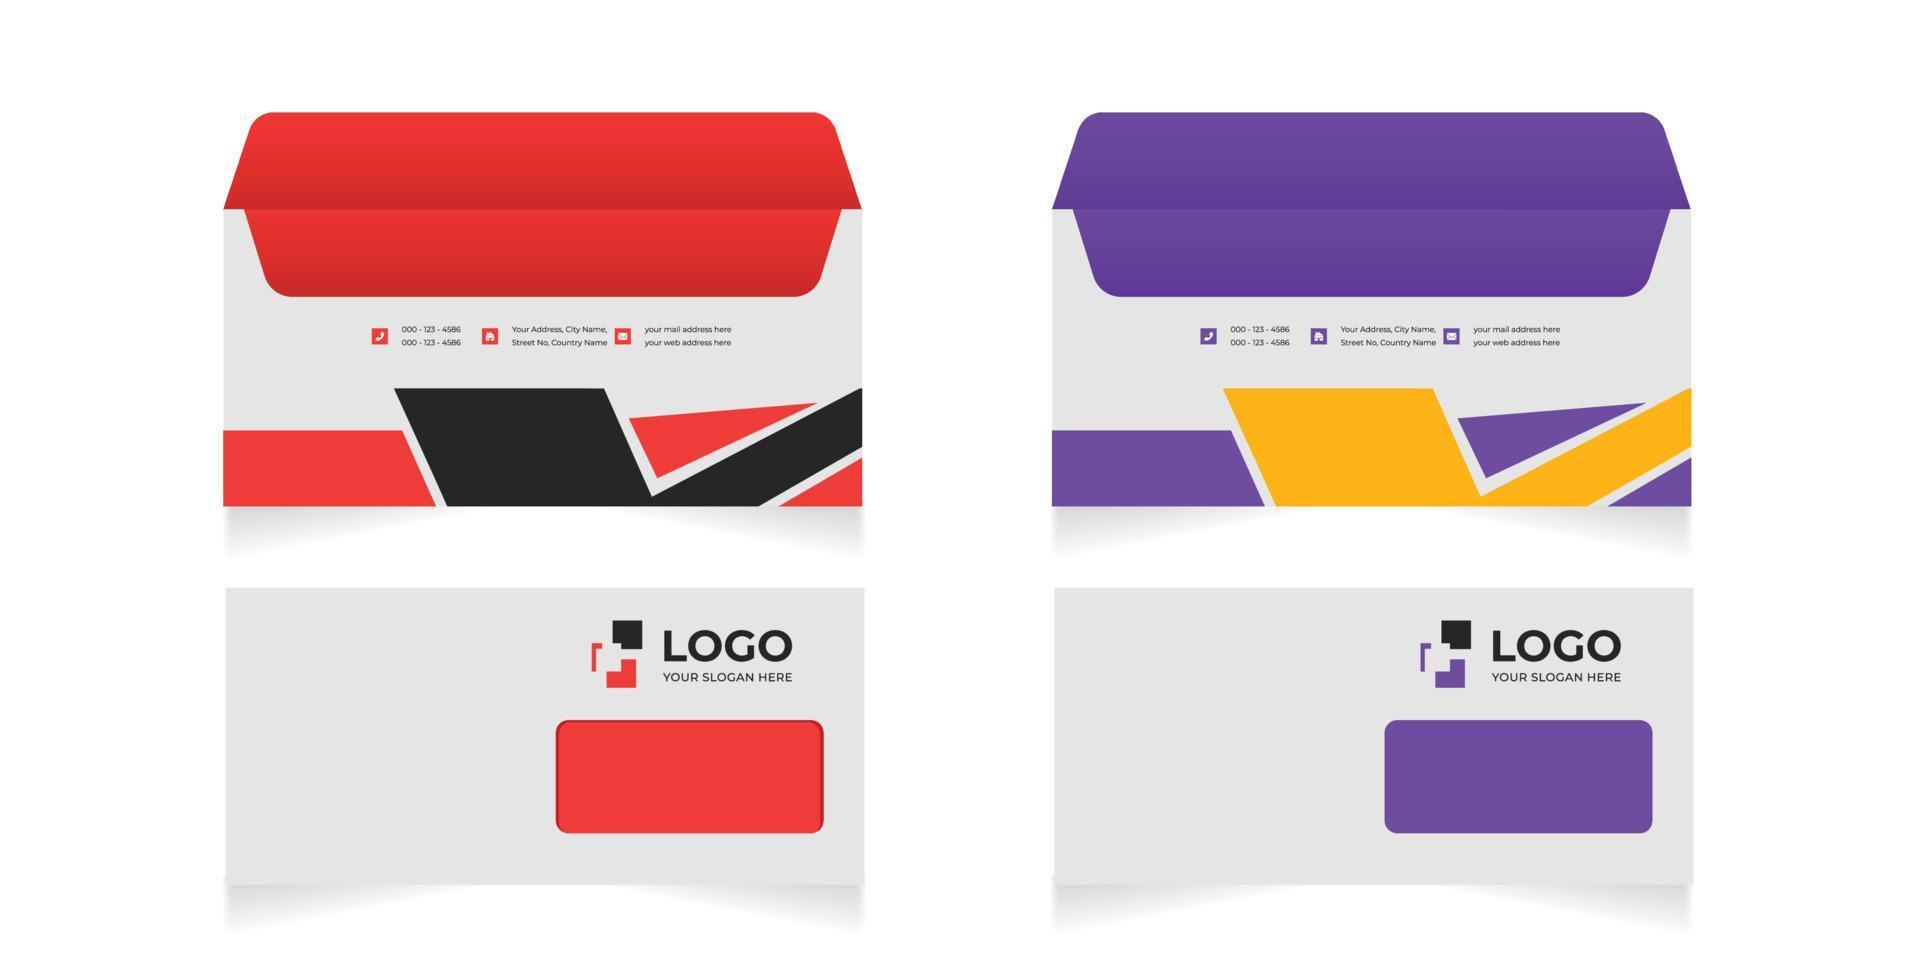 Corporate identity envelope Design is editable vector illustration